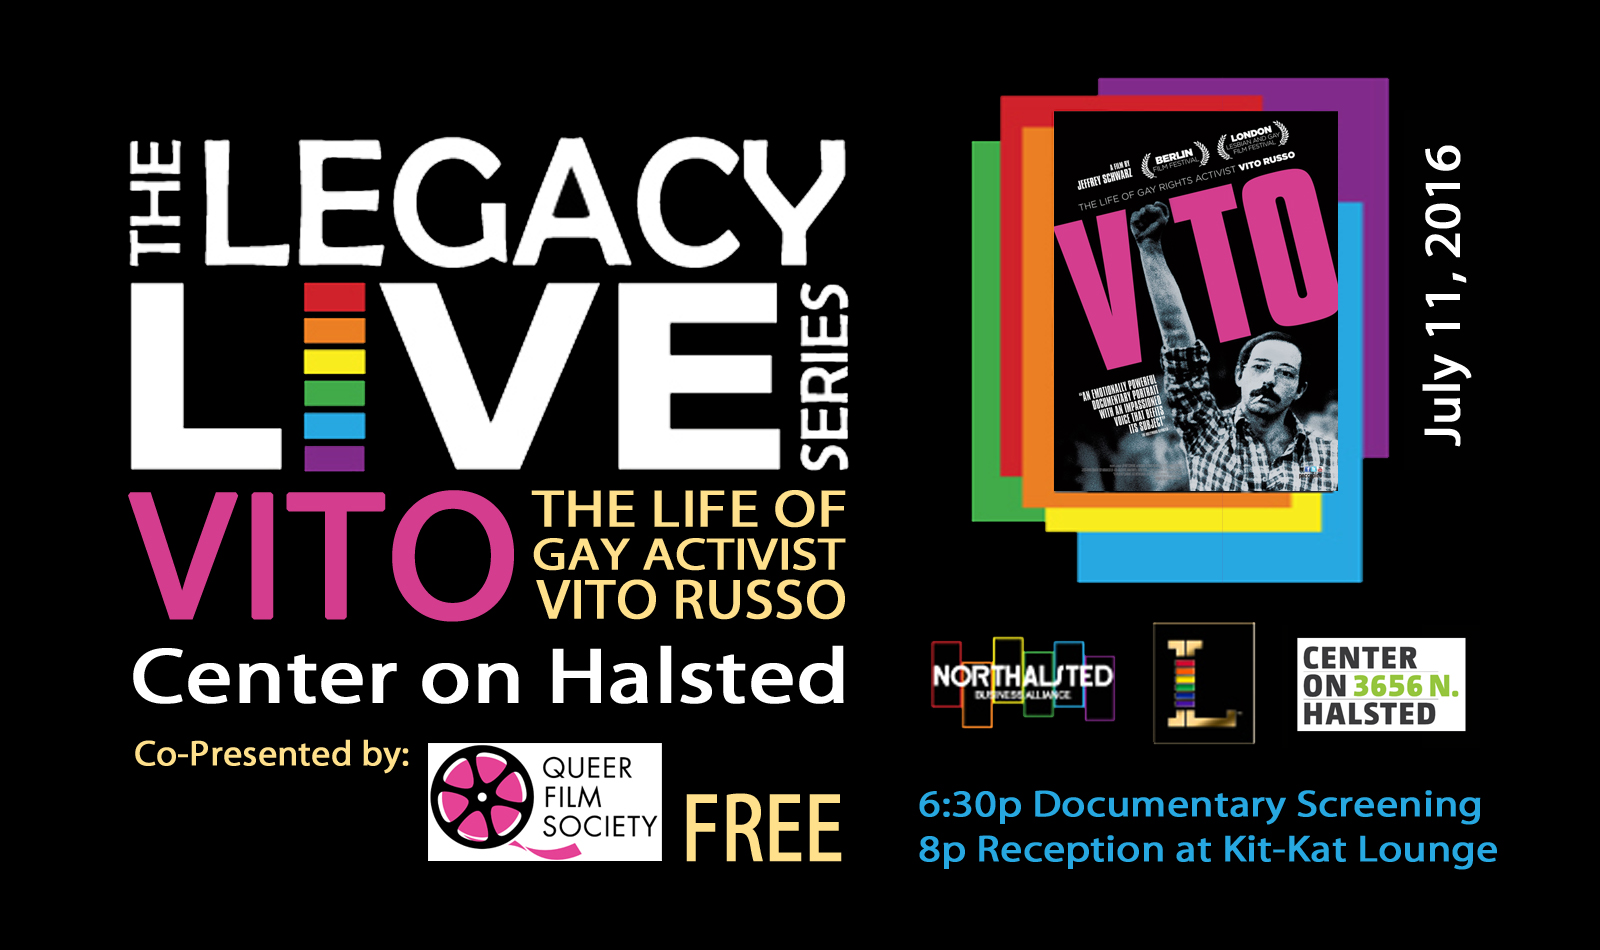 LEGACY LIVE Vito Russo Documentary Screening 2016